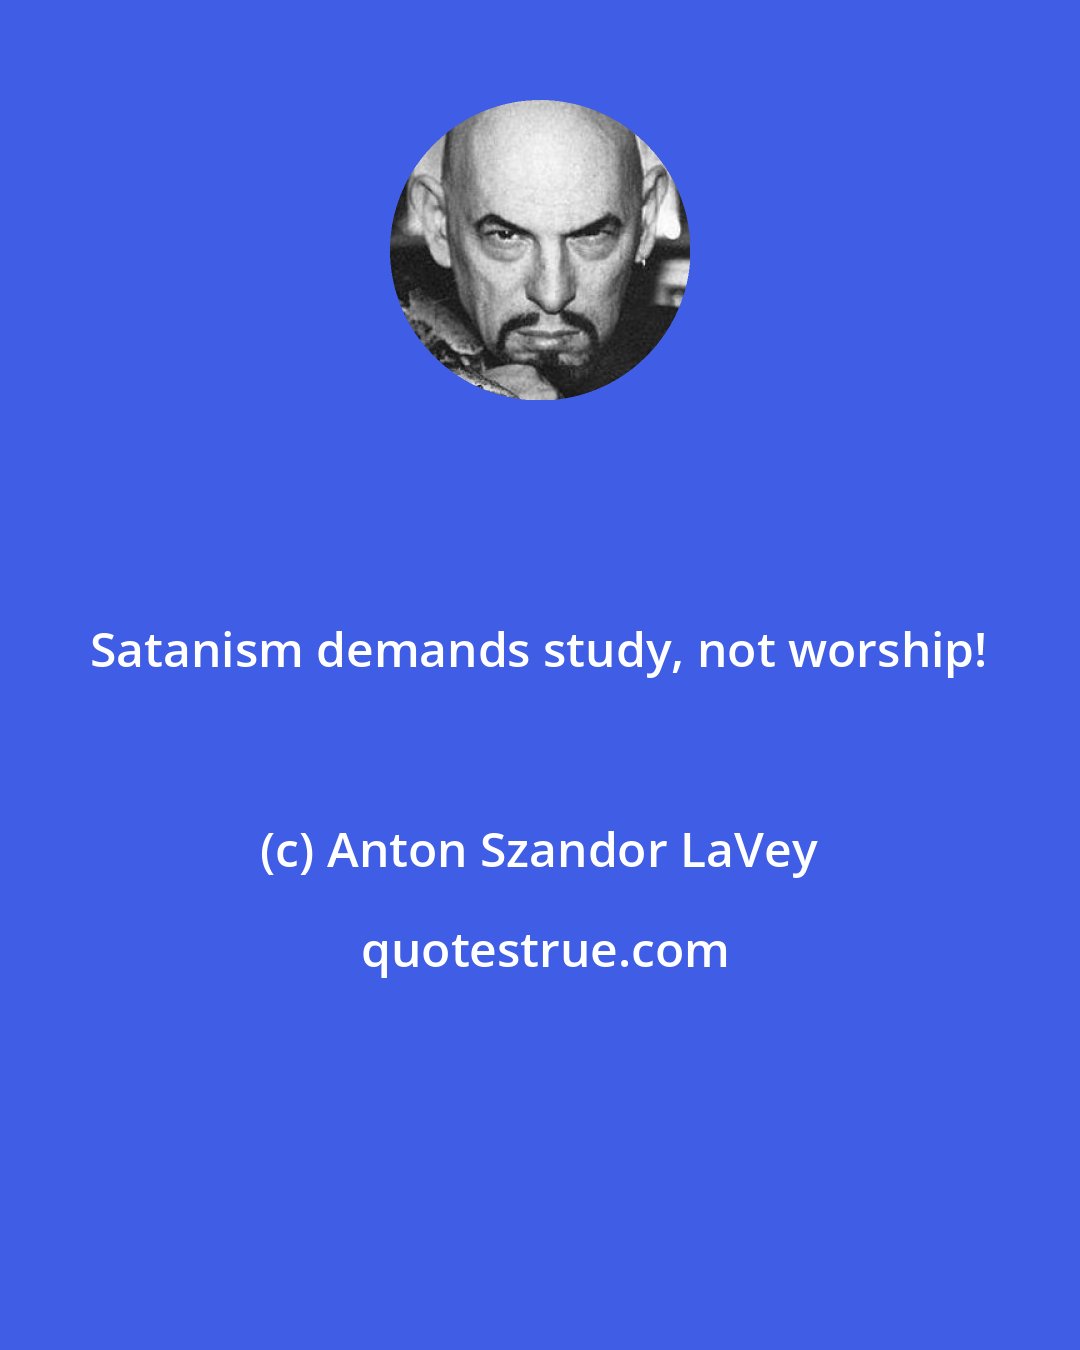 Anton Szandor LaVey: Satanism demands study, not worship!